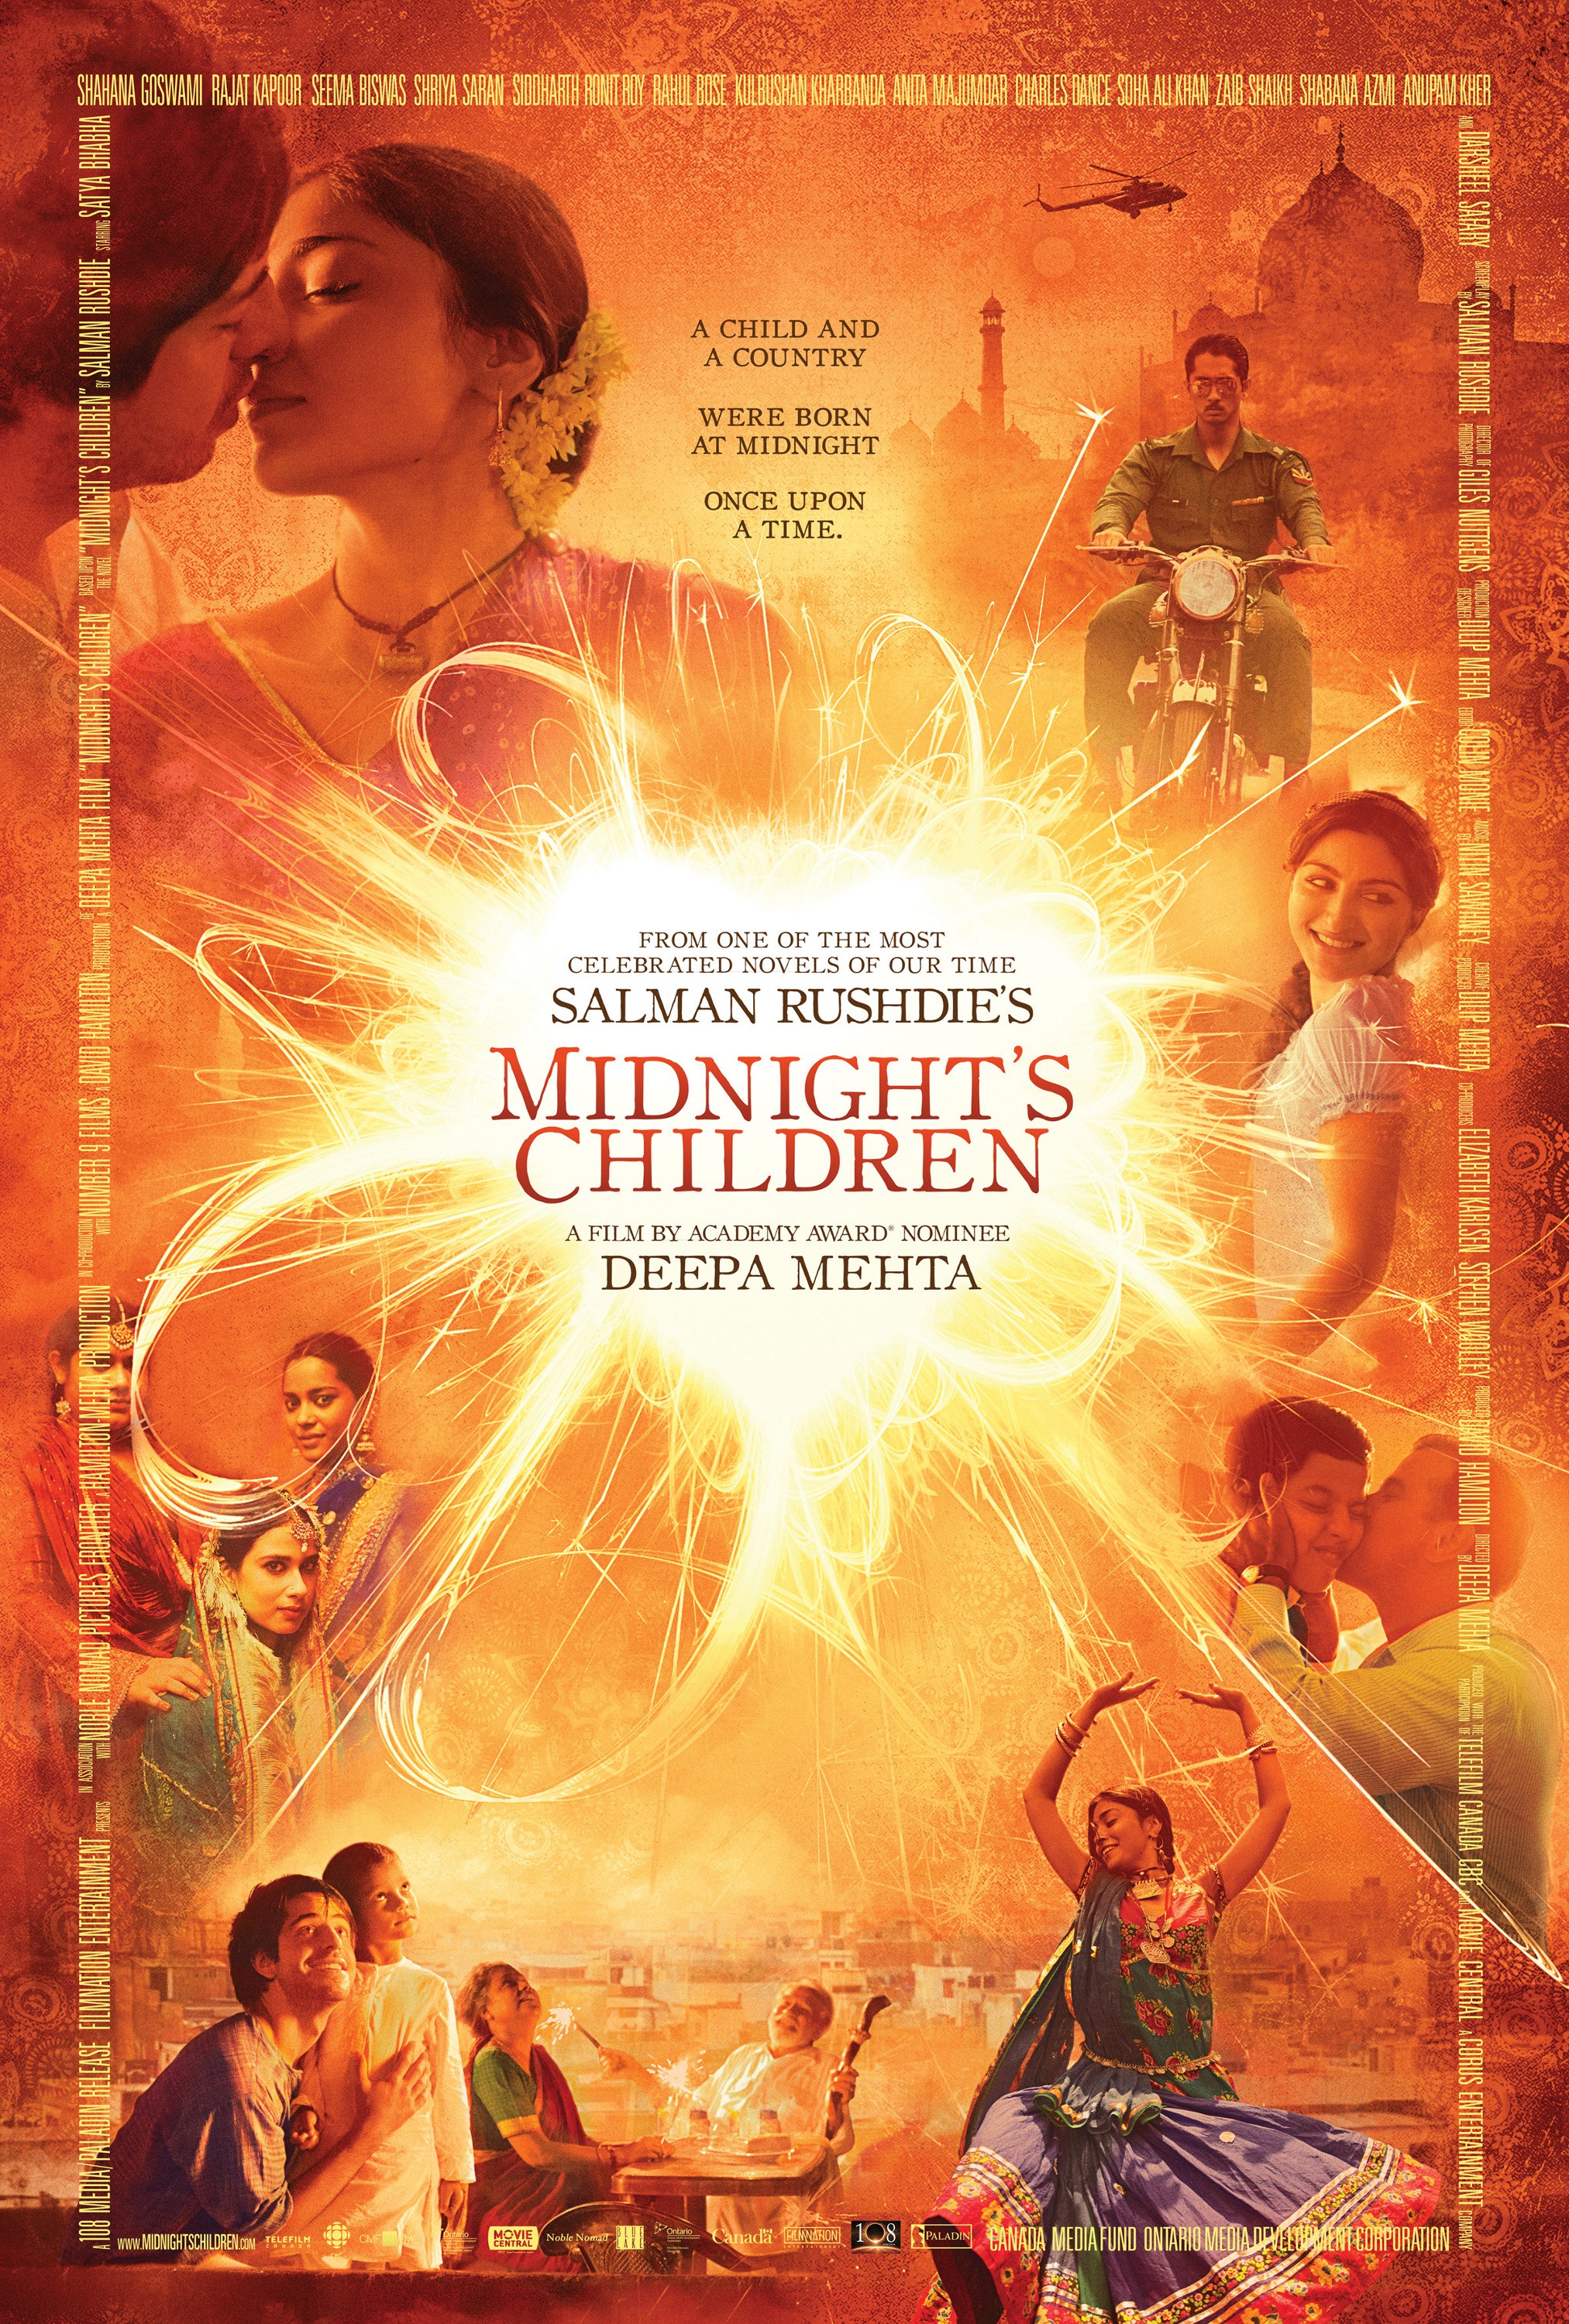 Mega Sized Movie Poster Image for Midnight's Children (#6 of 7)